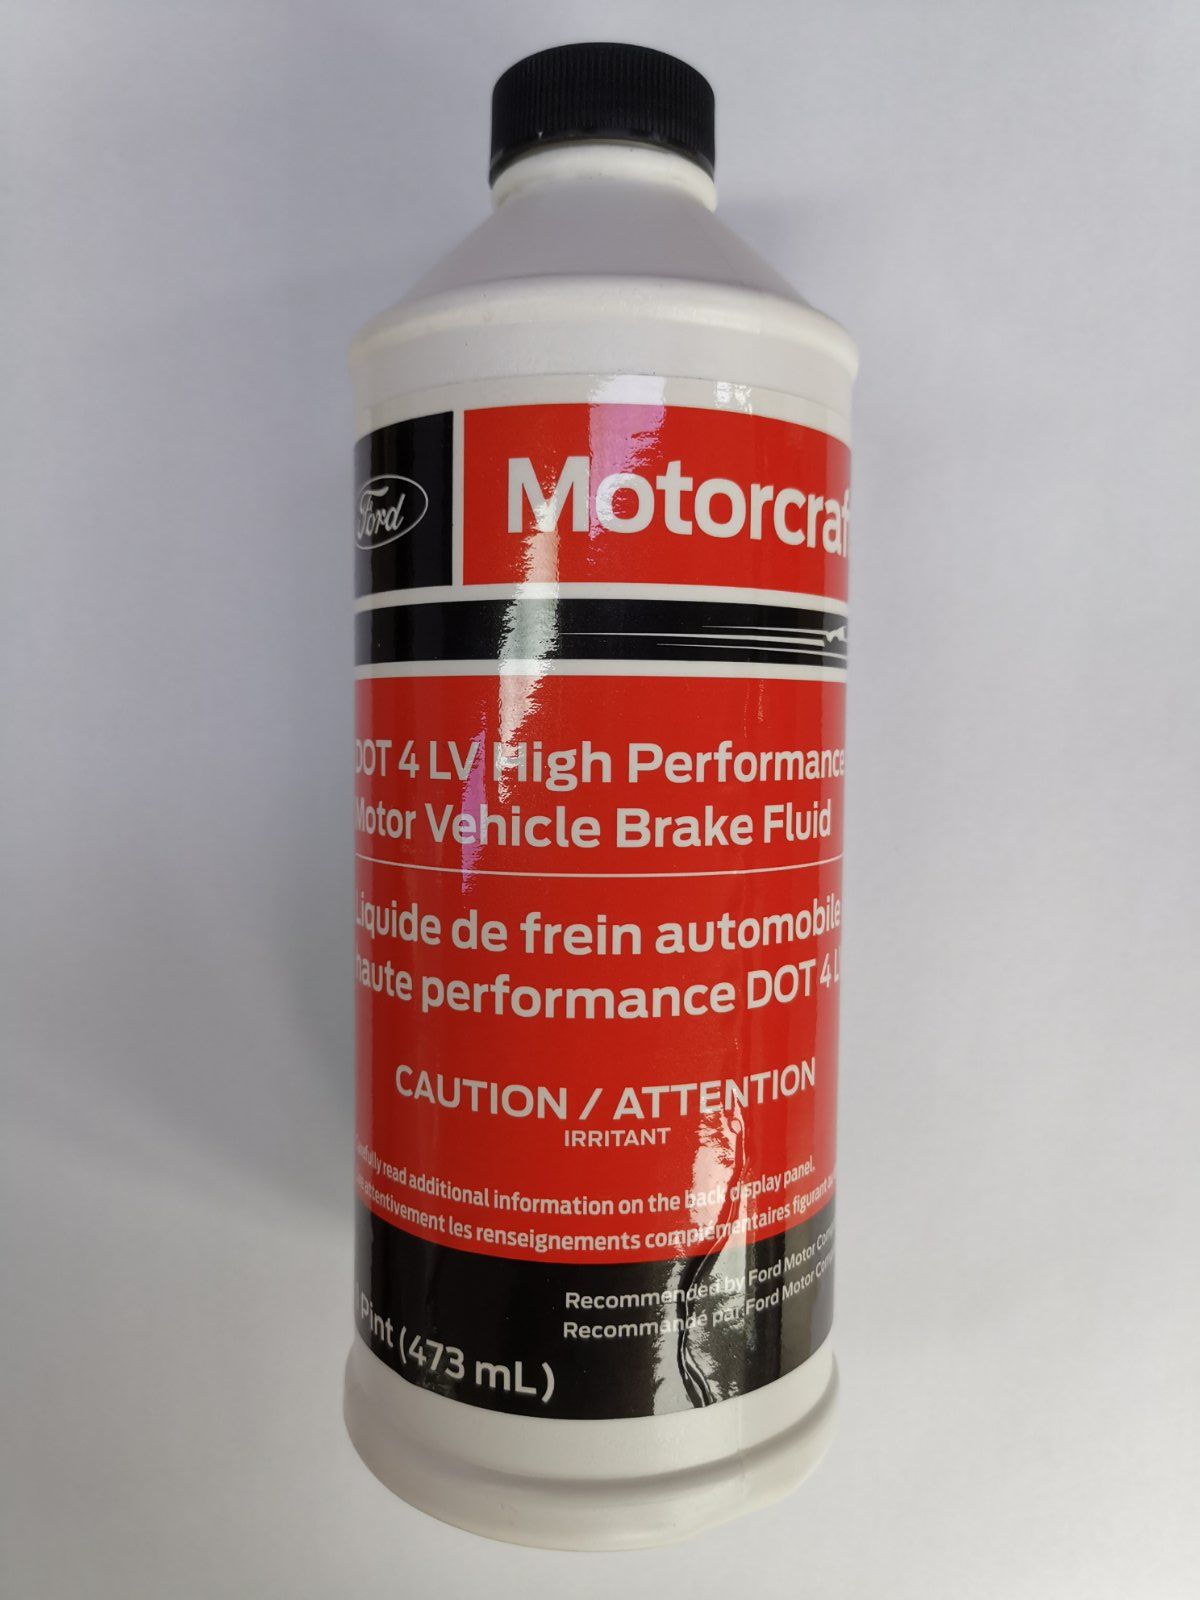 Ford Motorcraft DOT 4 LV High Performance Motor Vehicle Brake Fluid PN# PM20